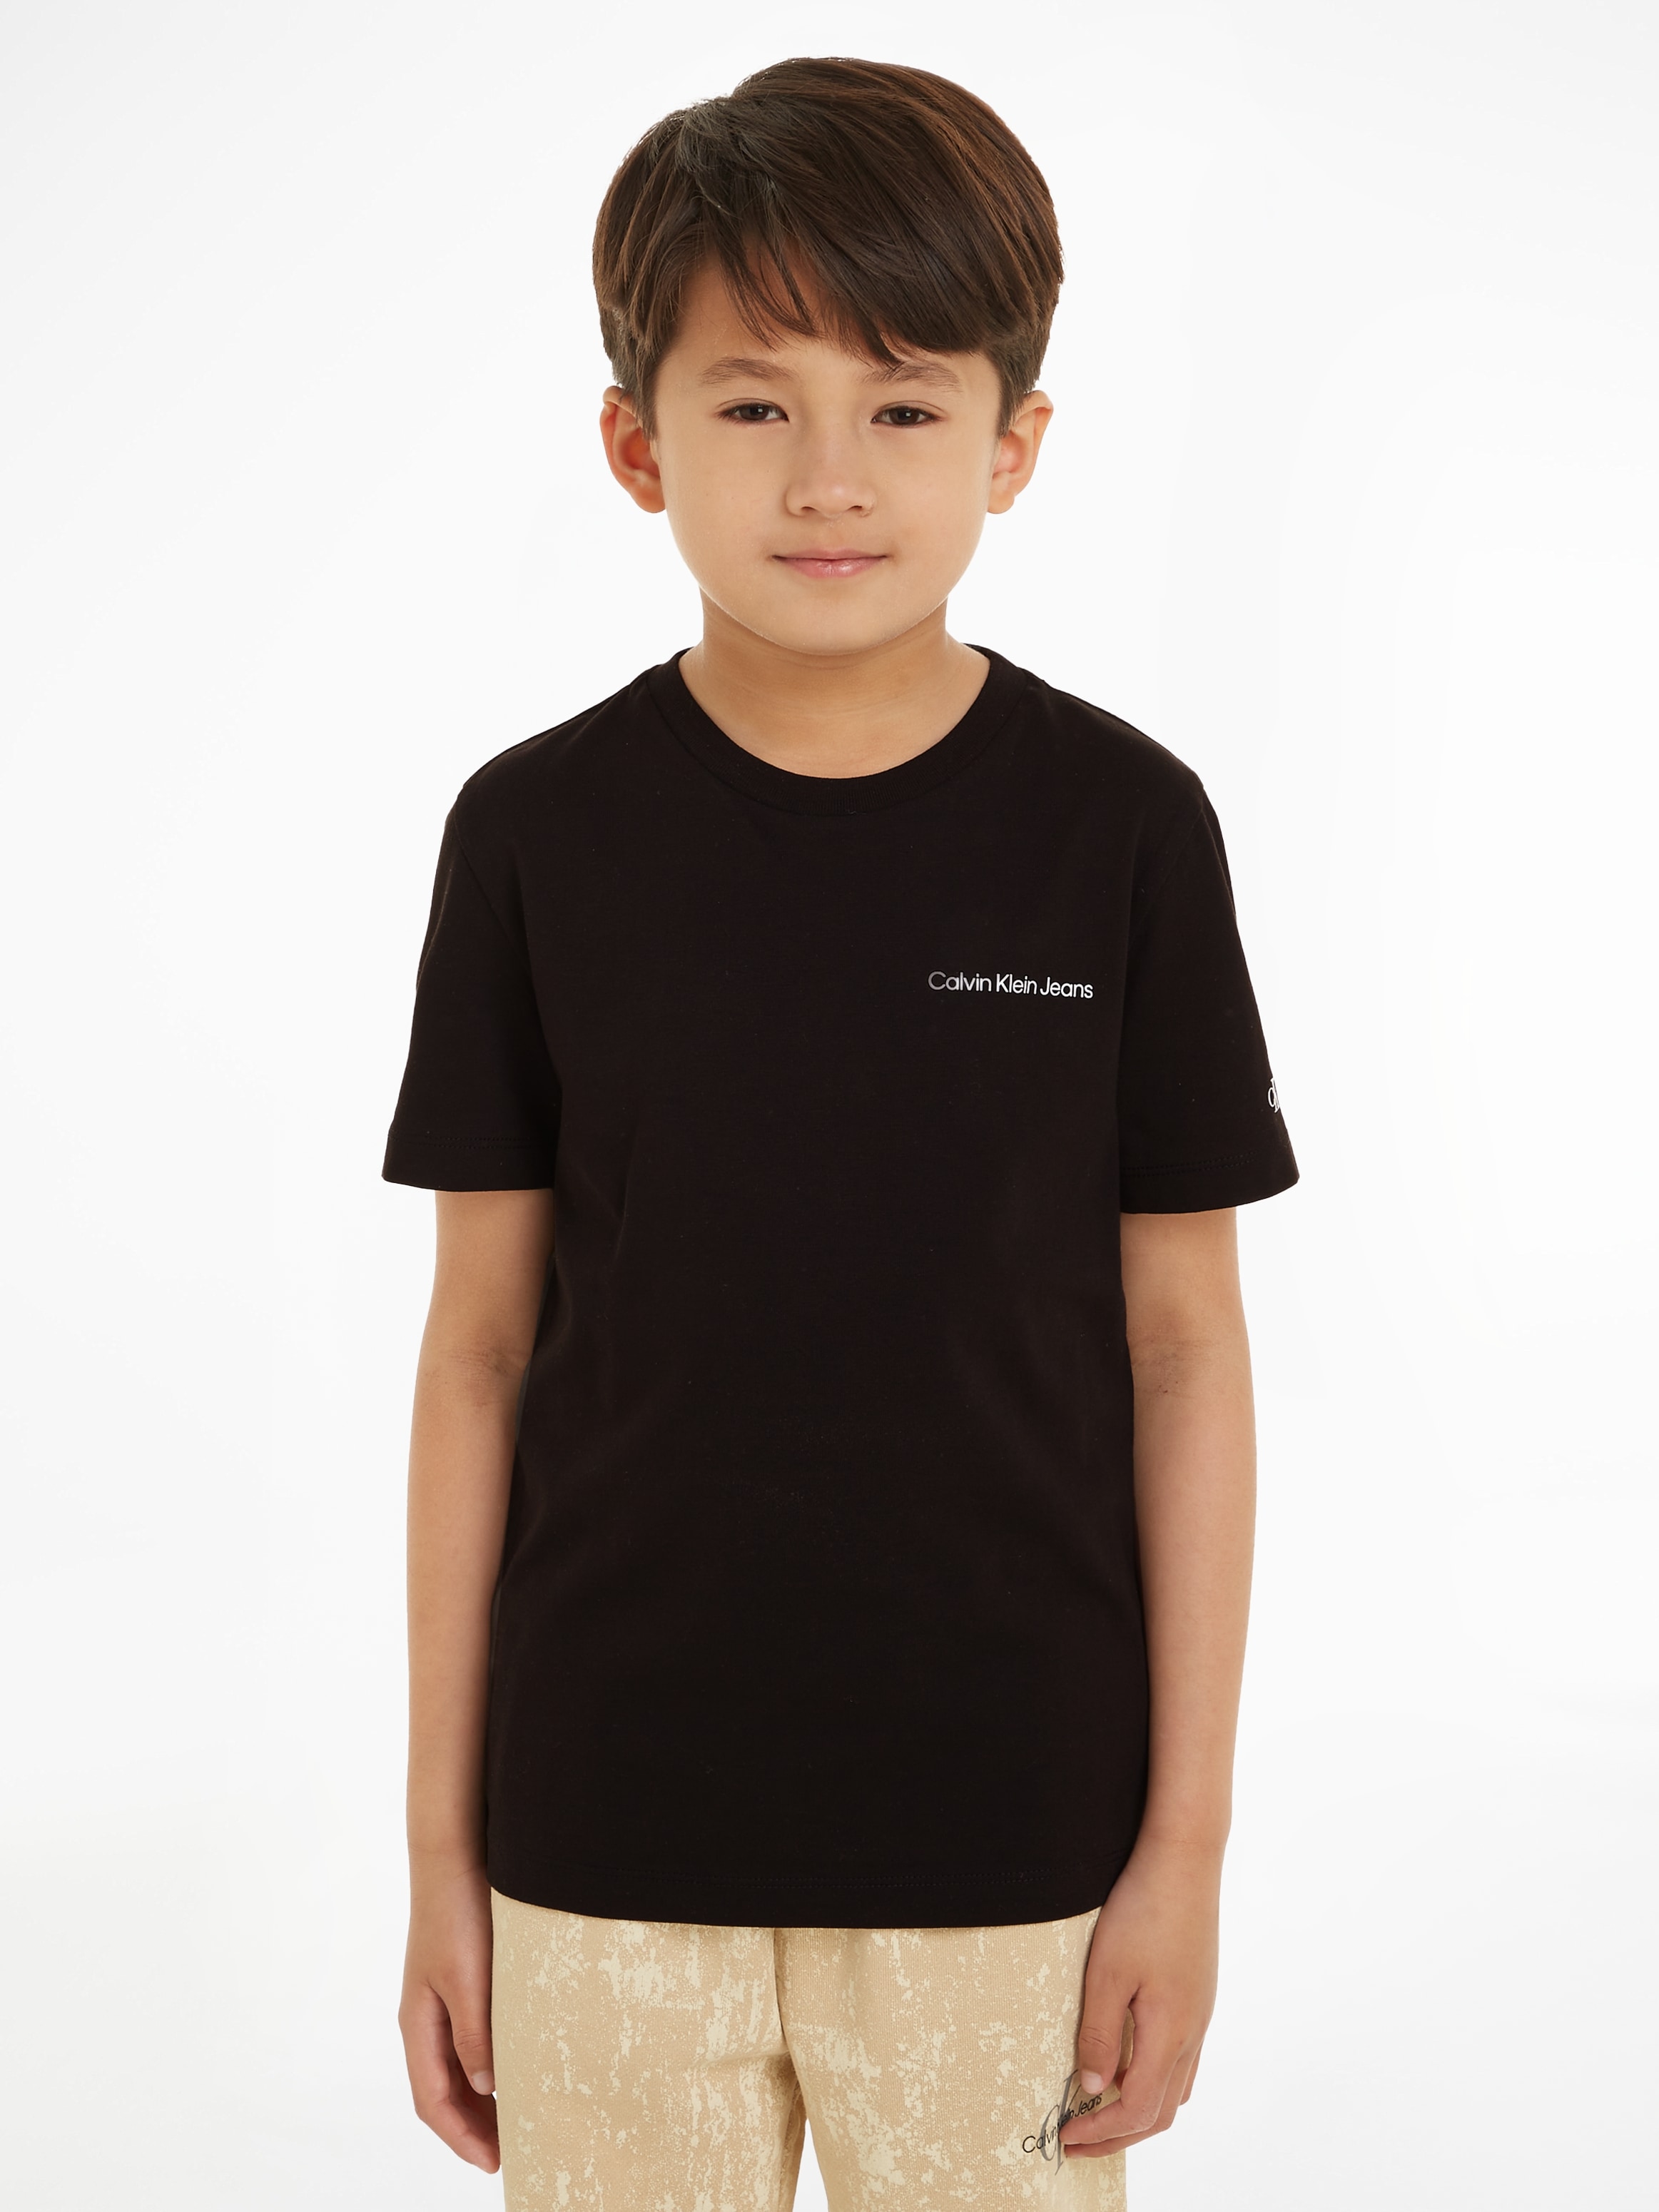 T-Shirt T-SHIRT«, mit LOGO Calvin SS Klein Logodruck »CHEST Jeans online INST. shoppen